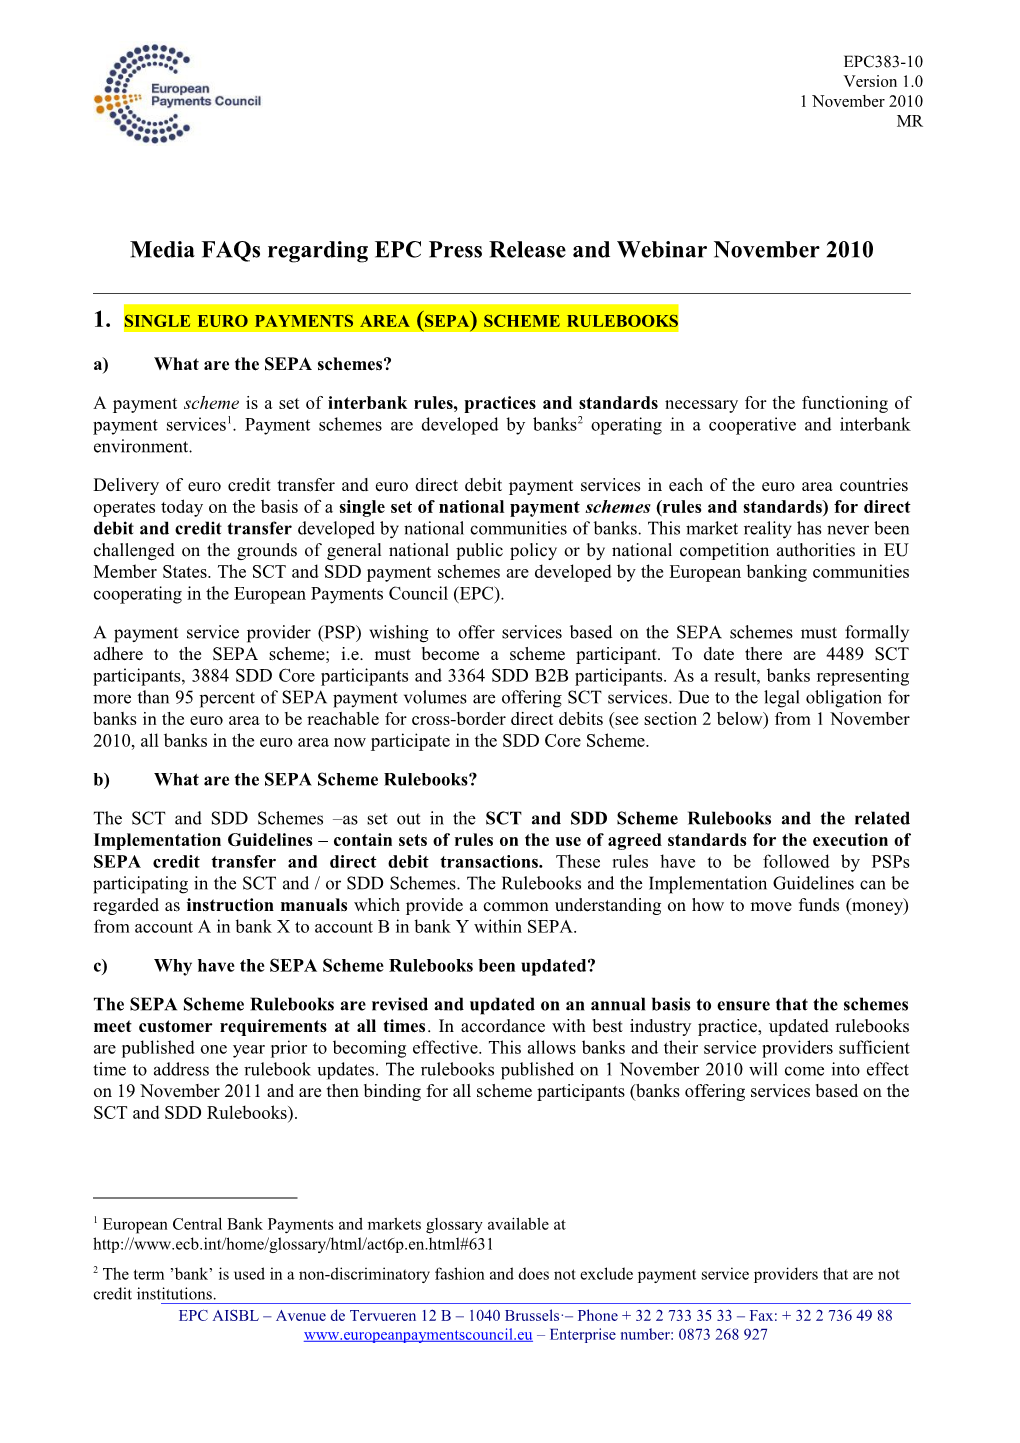 Media Faqs Regarding EPC Press Release and Webinar November 2010